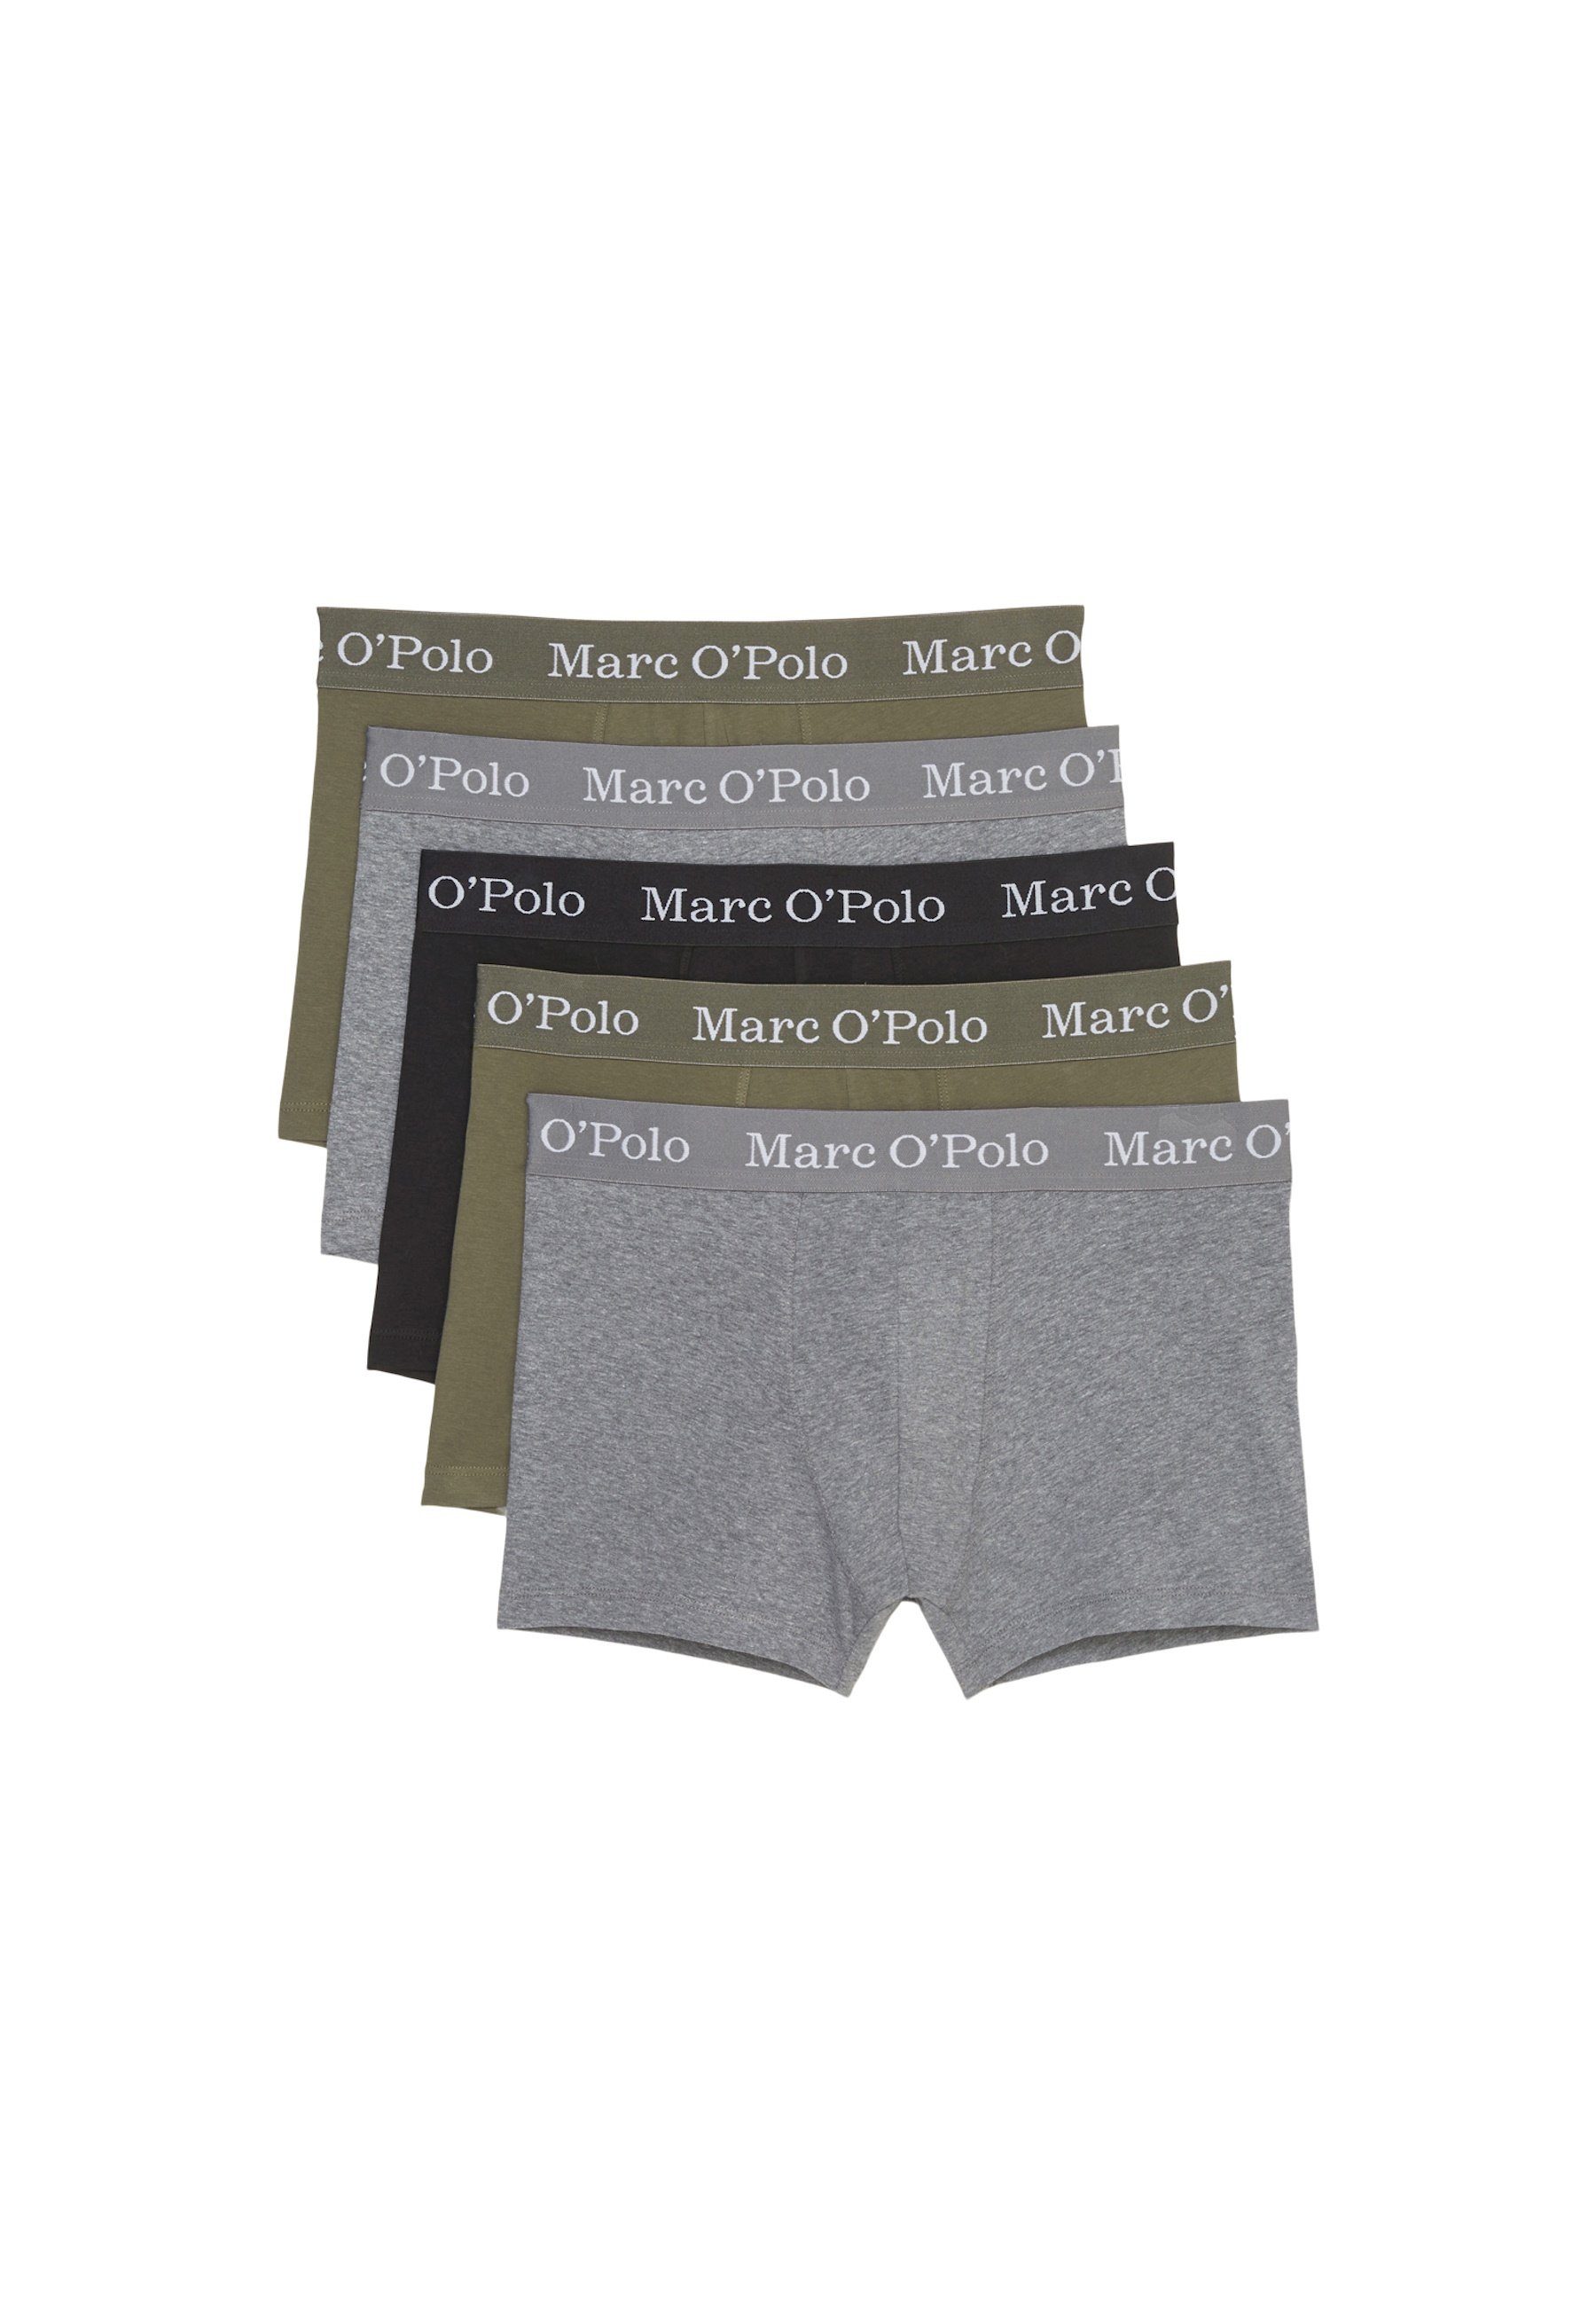 Top-Urlaubsort Marc O'Polo Boxershorts Boxershorts (5-St) Fünferpack Unterhosen Basic Melange Black/Beetle/Grey